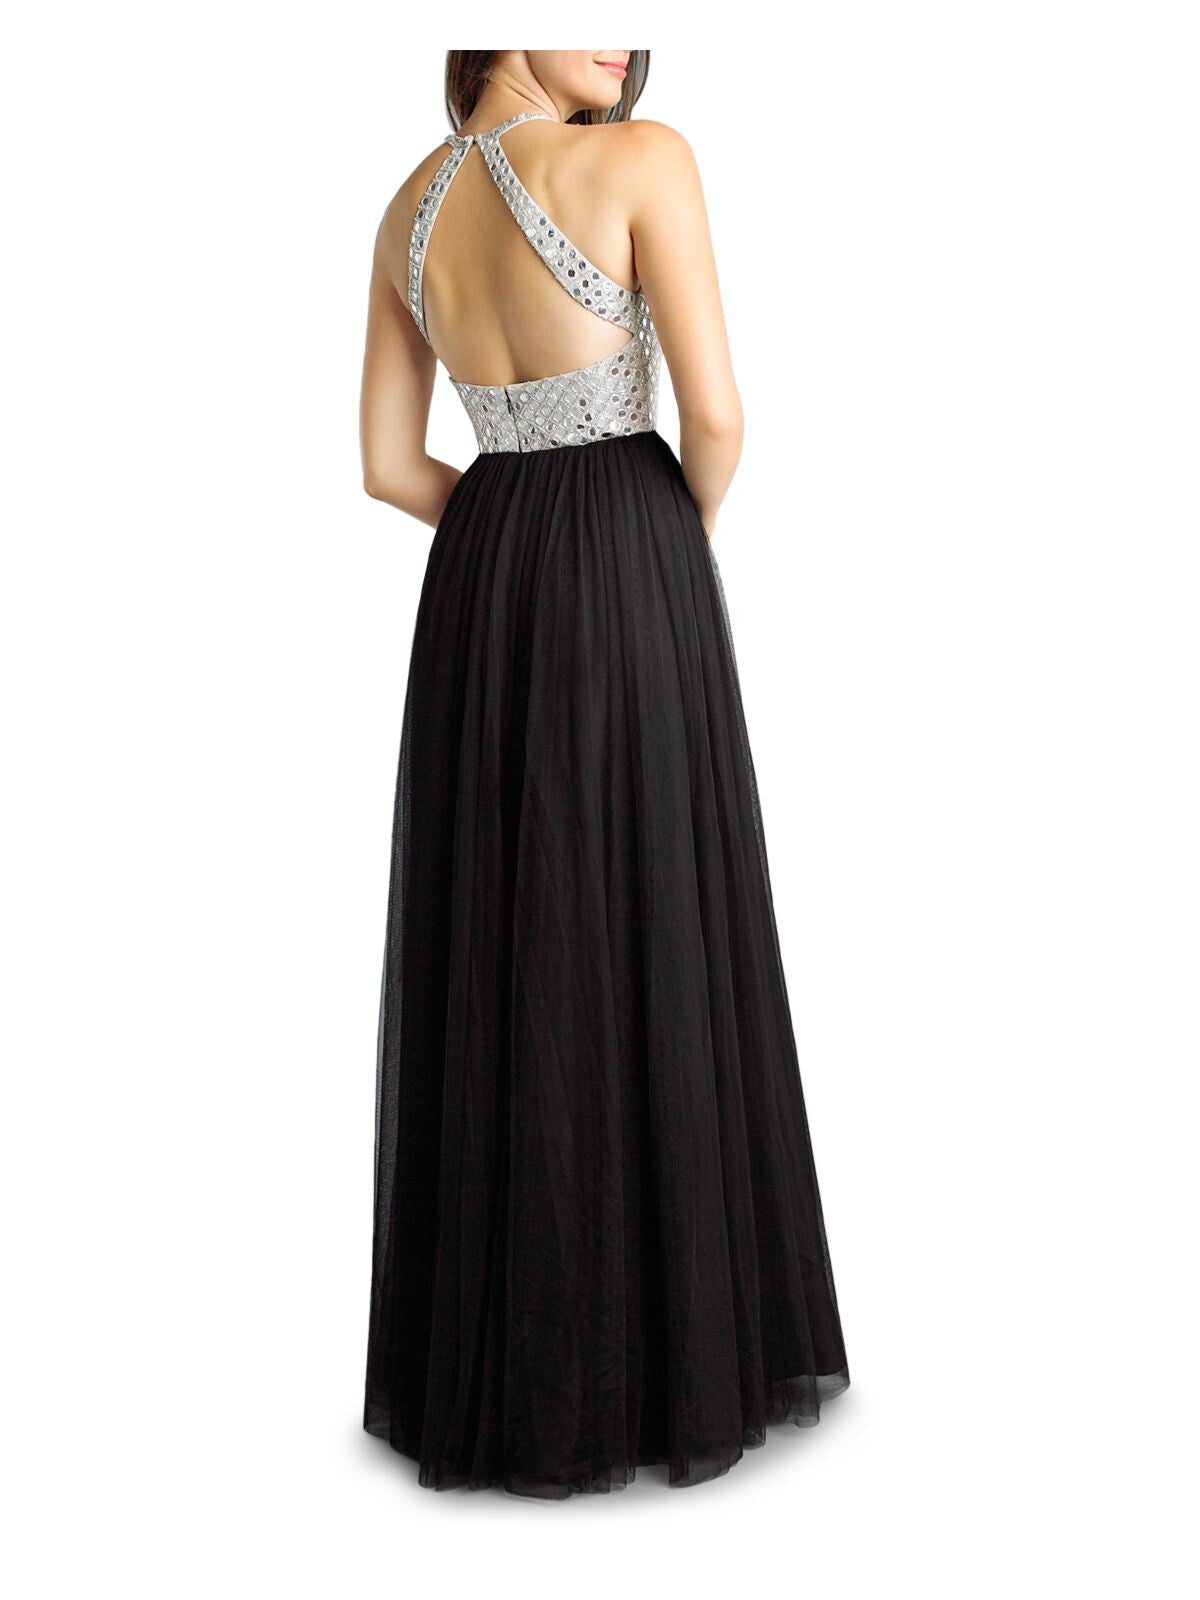 Basix Womens Black Embellished Sheer Mirrored Sleeveless Halter Full-Length Formal Fit + Flare Dress 2